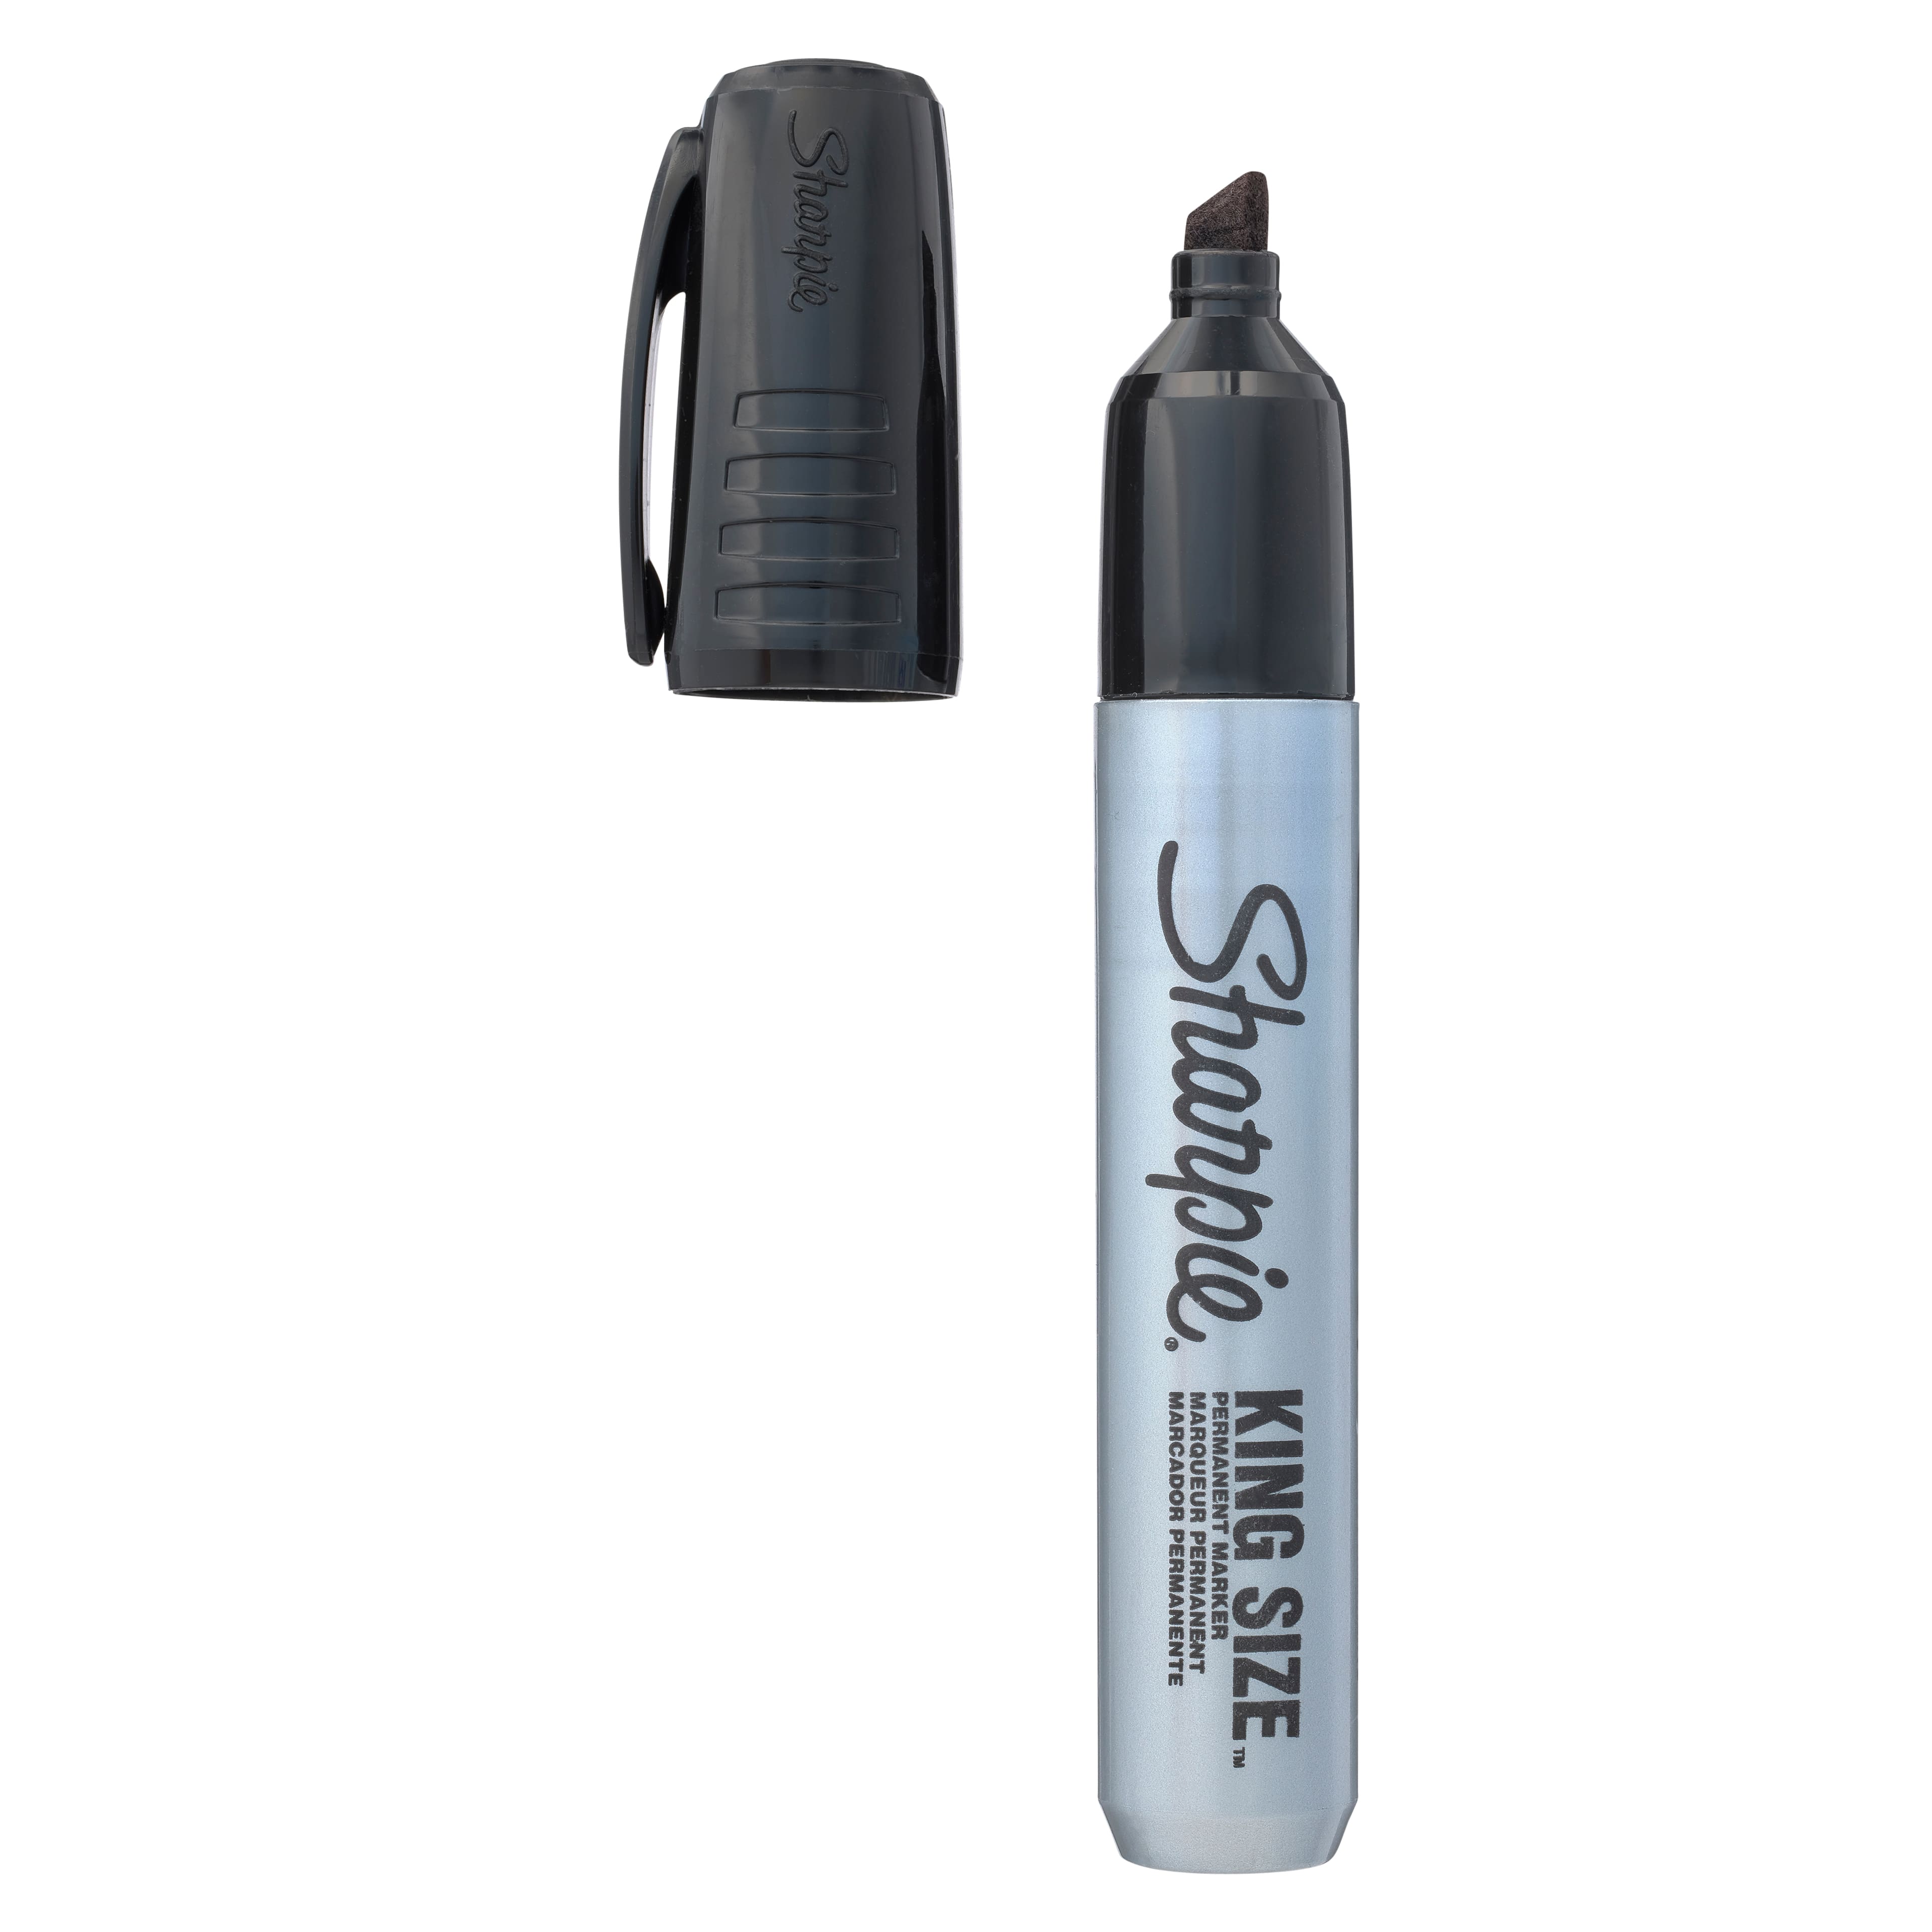 Sharpie King Size Permanent Marker, Black 1 ea (Pack of 12)